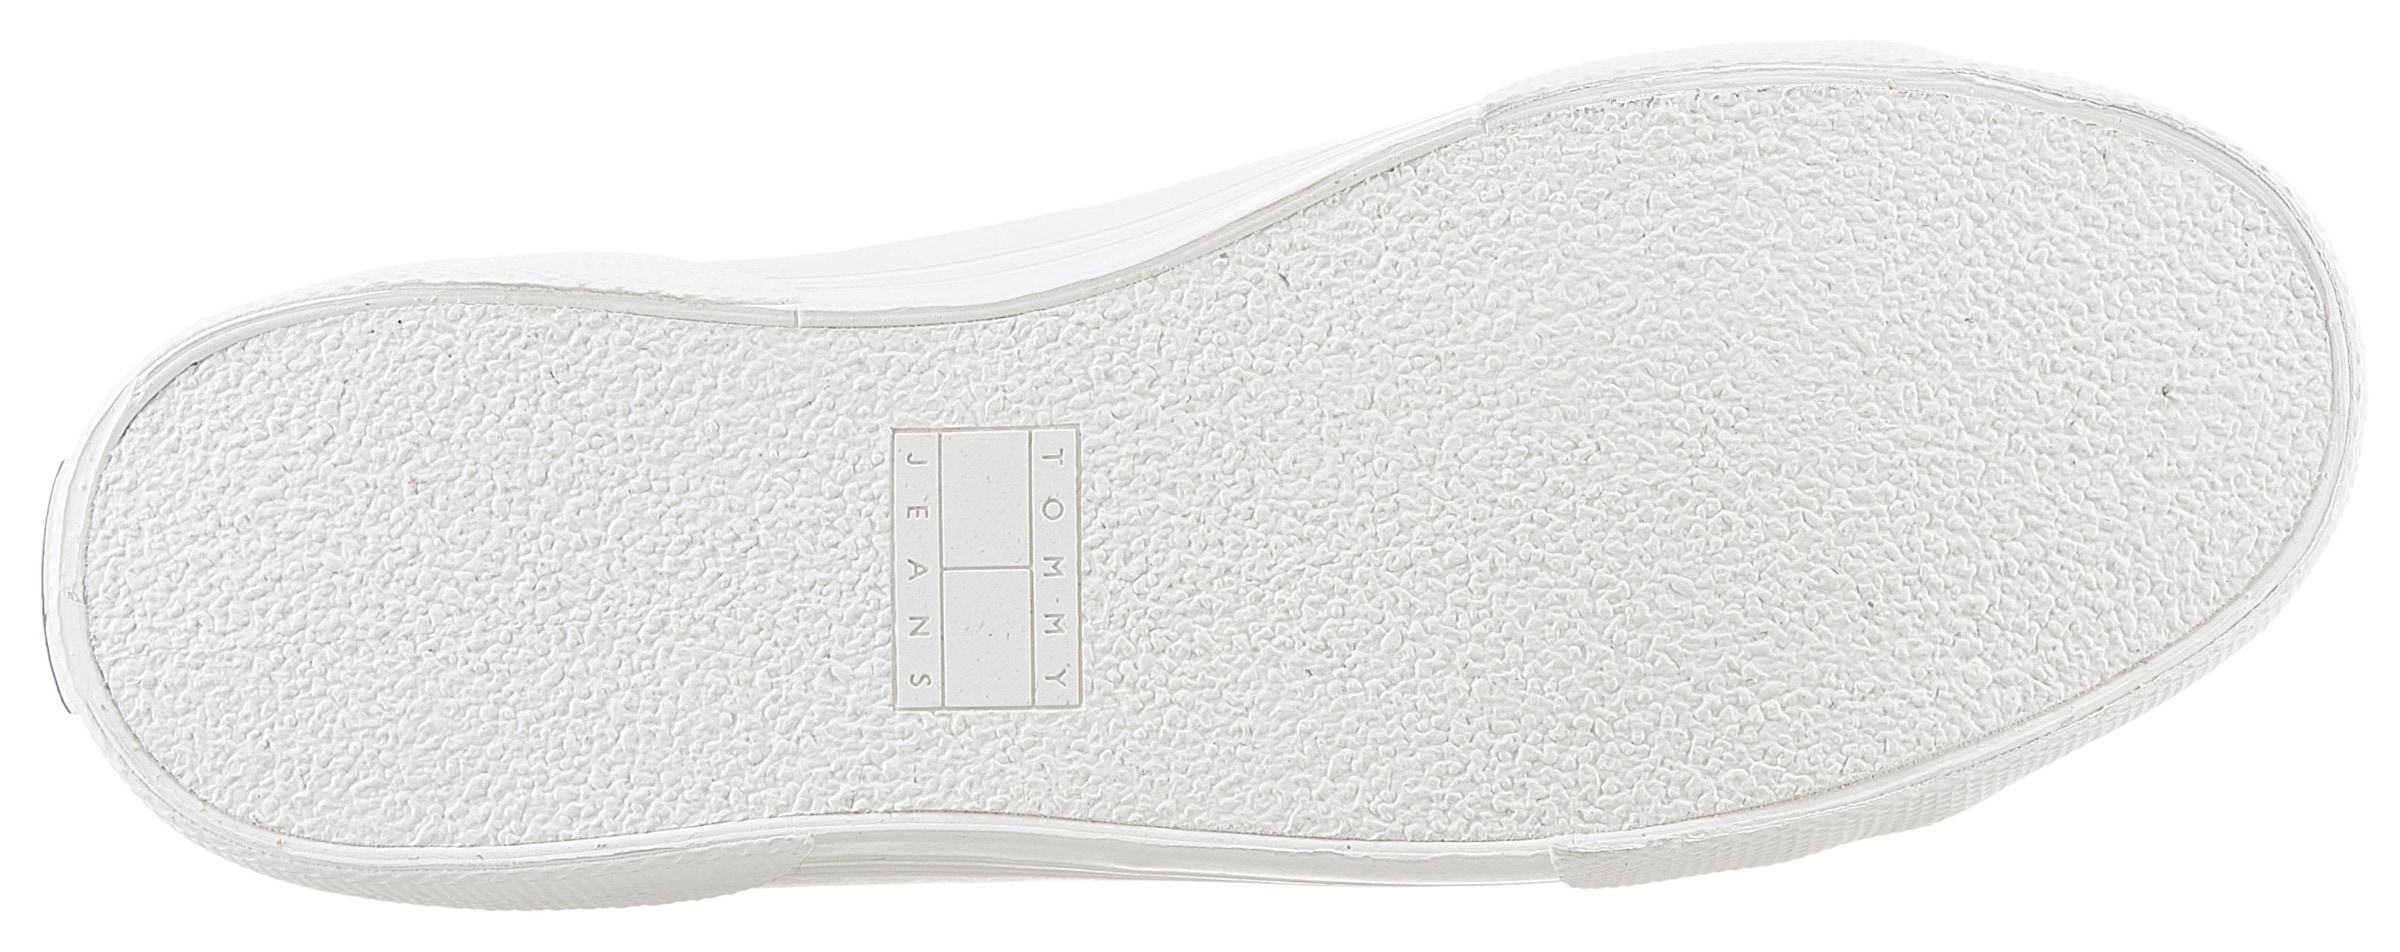 Tommy Jeans Sneaker »TJM LACE UP CANVAS COLOR«, mit Label, Freizeitschuh, Halbschuh, Schnürschuh